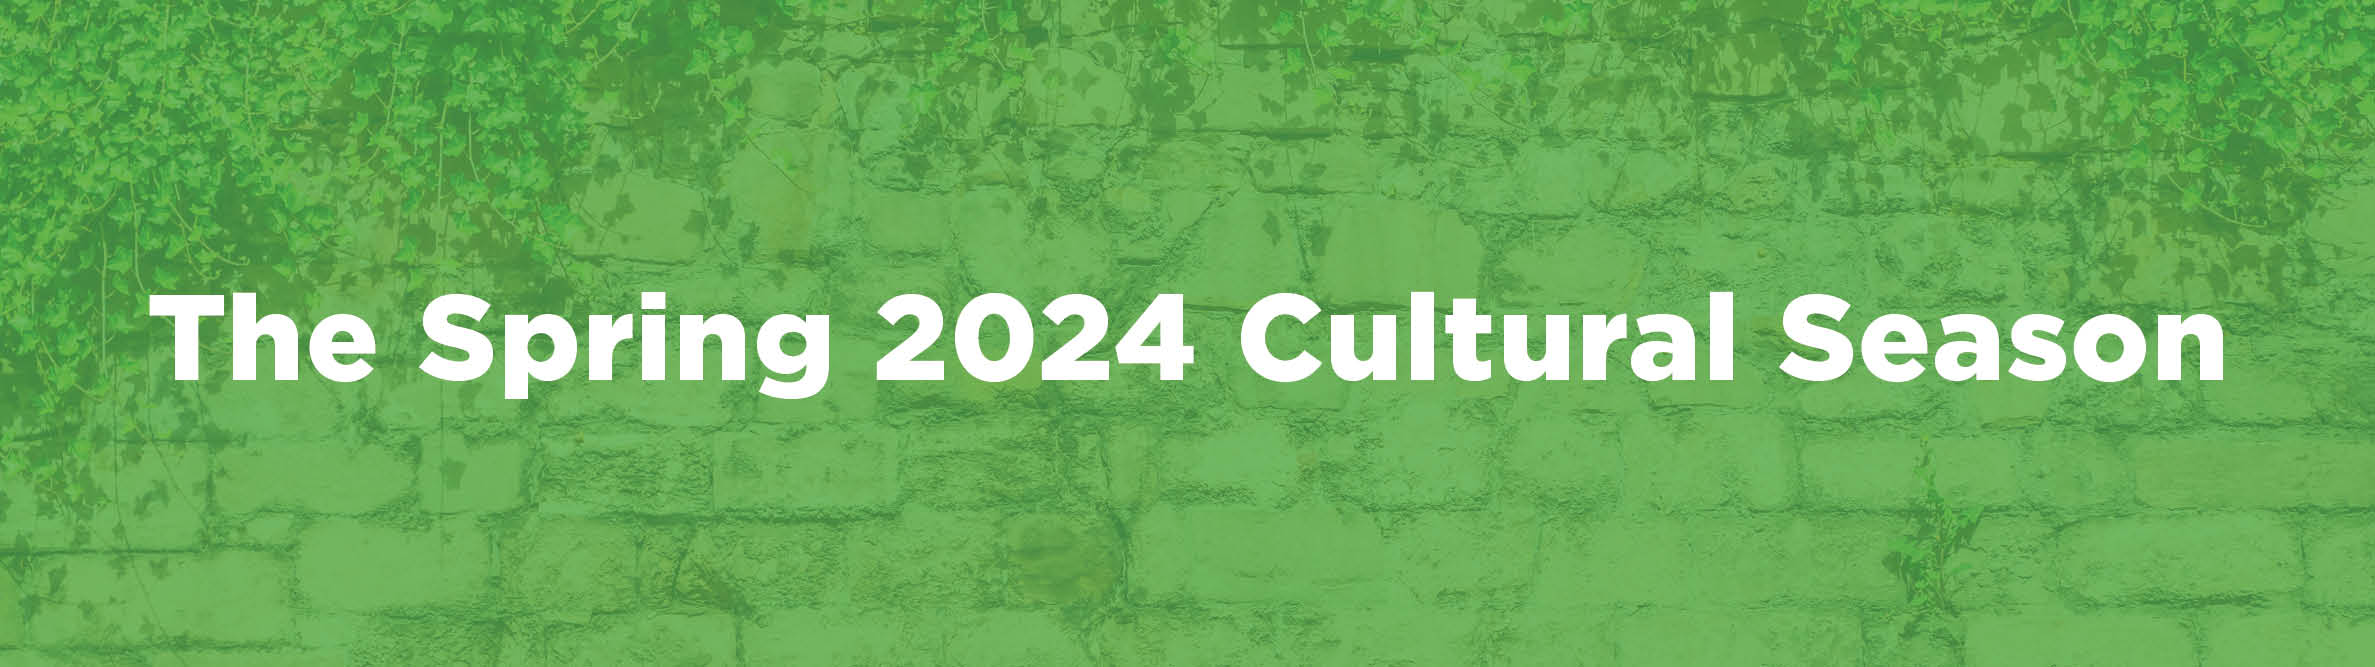 The Spring 2024 Cultural Season